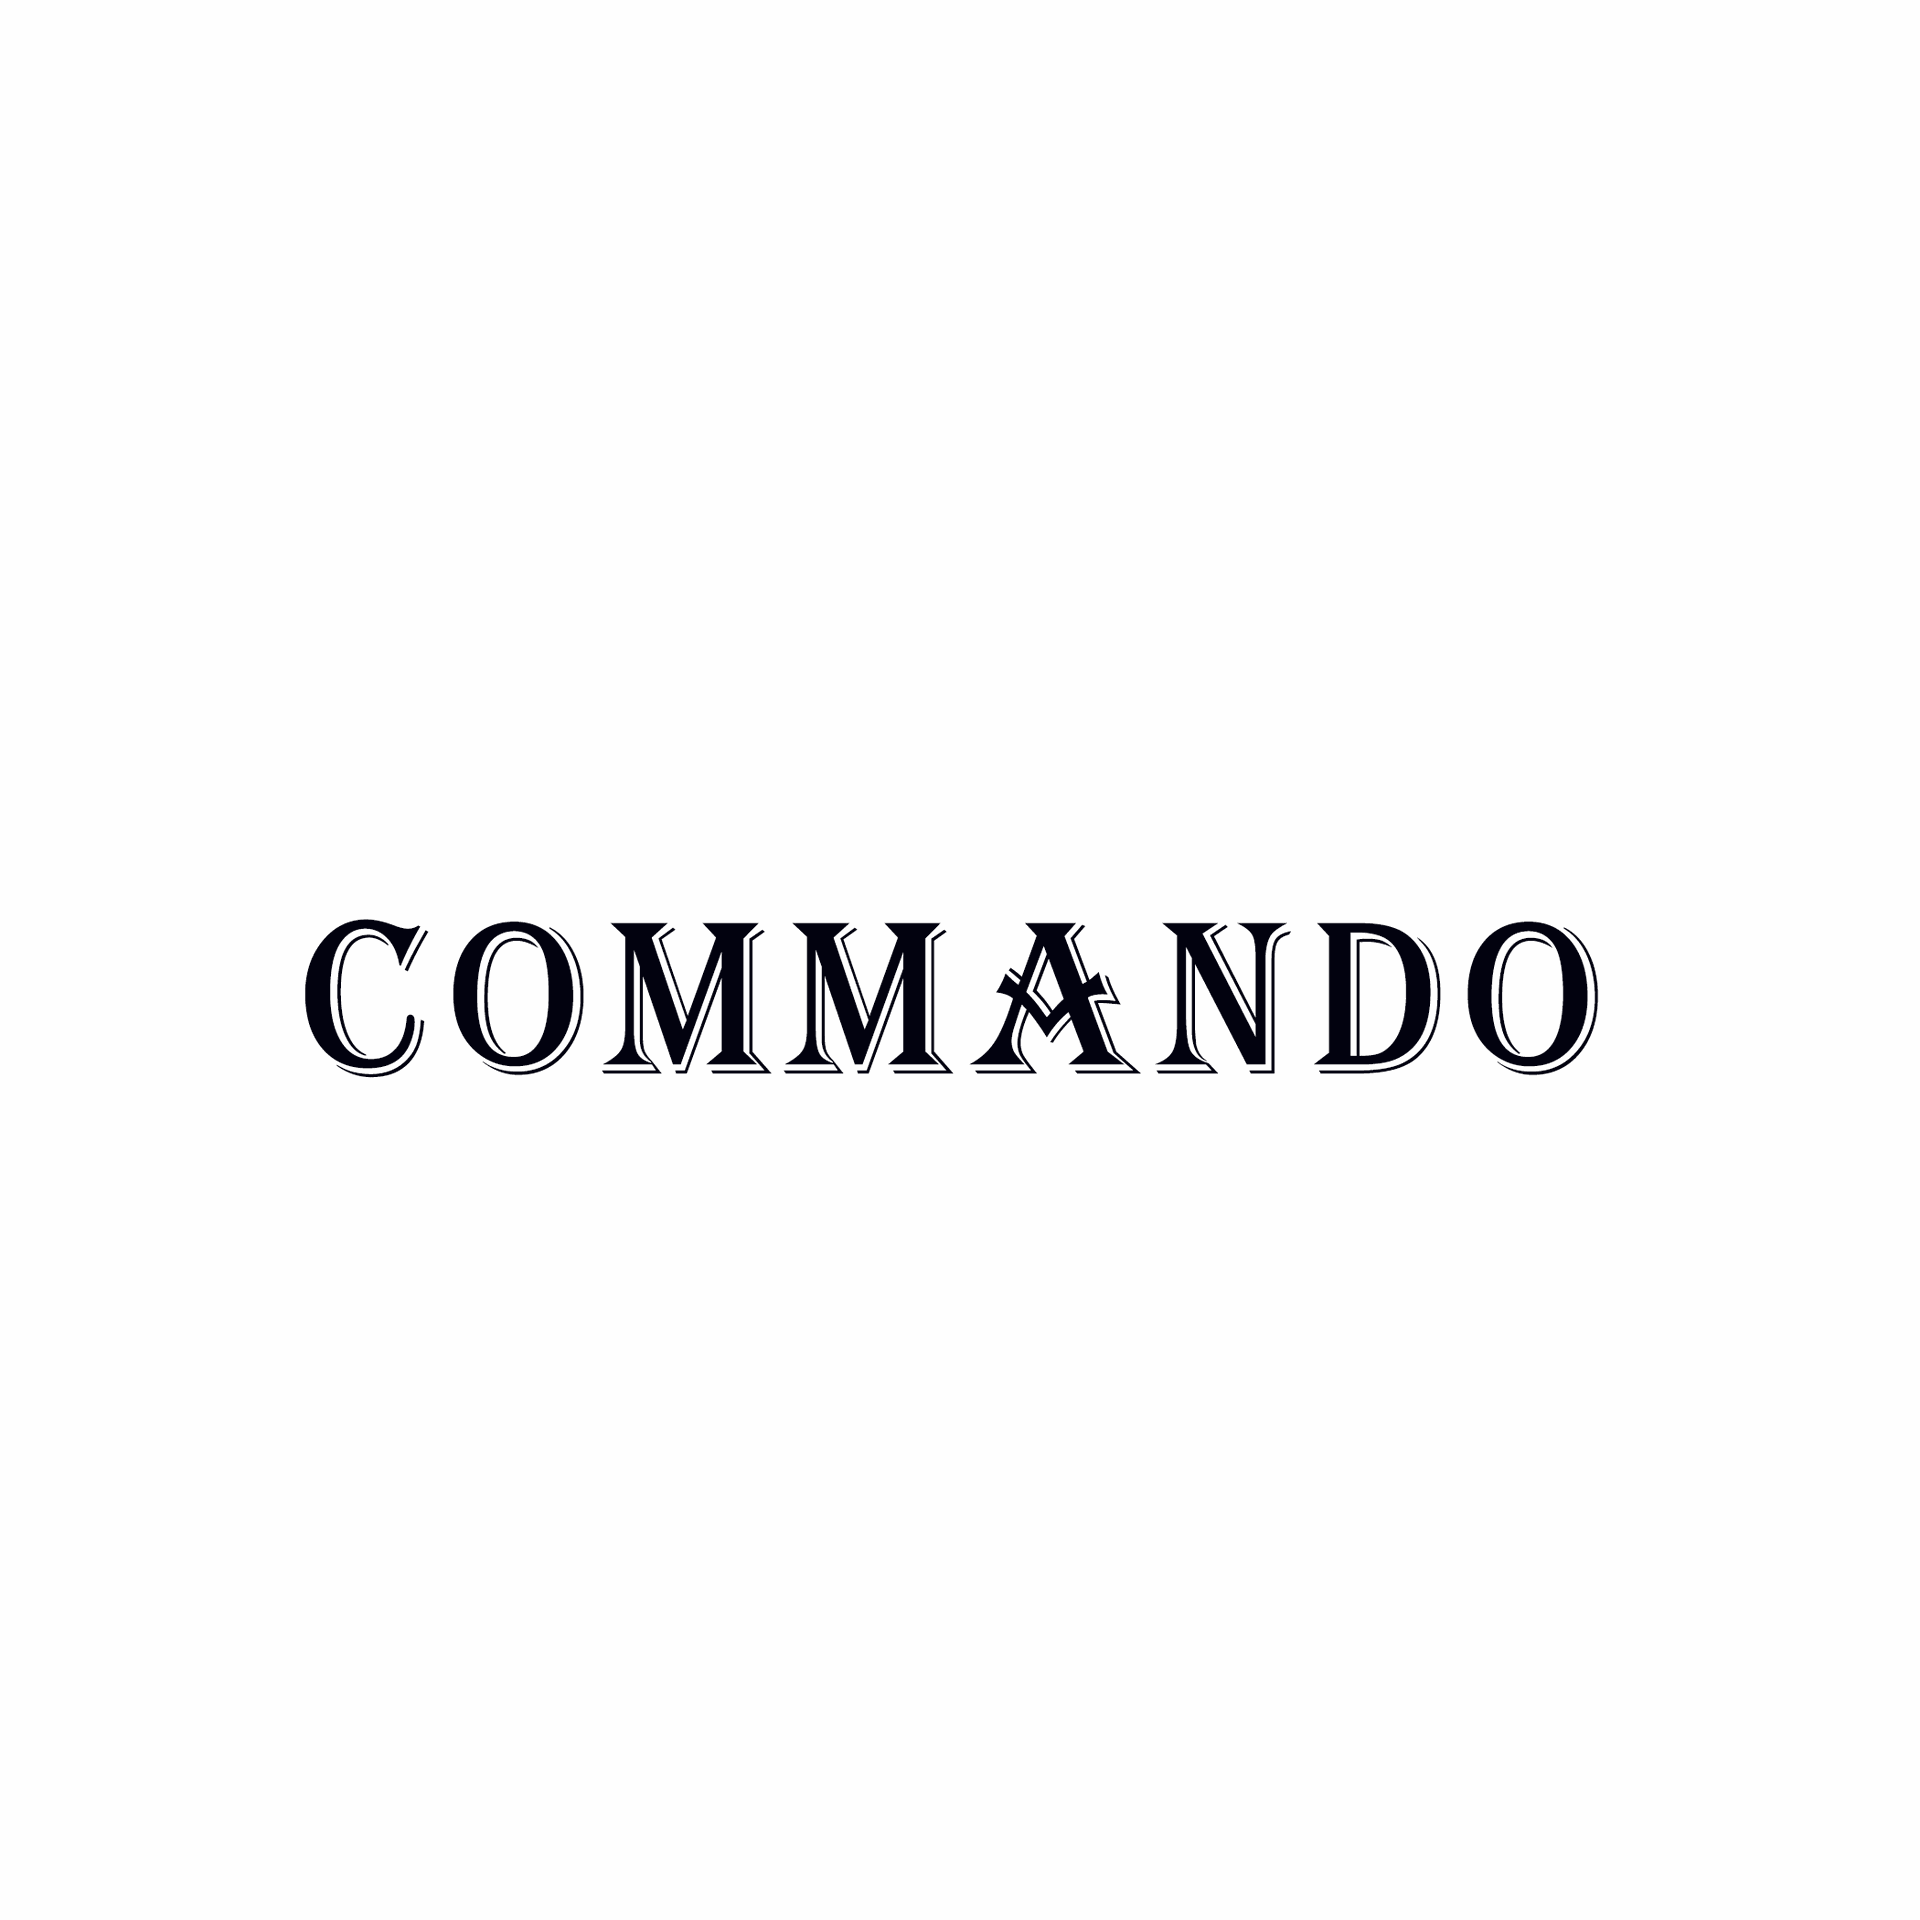 Product Brand: Commando